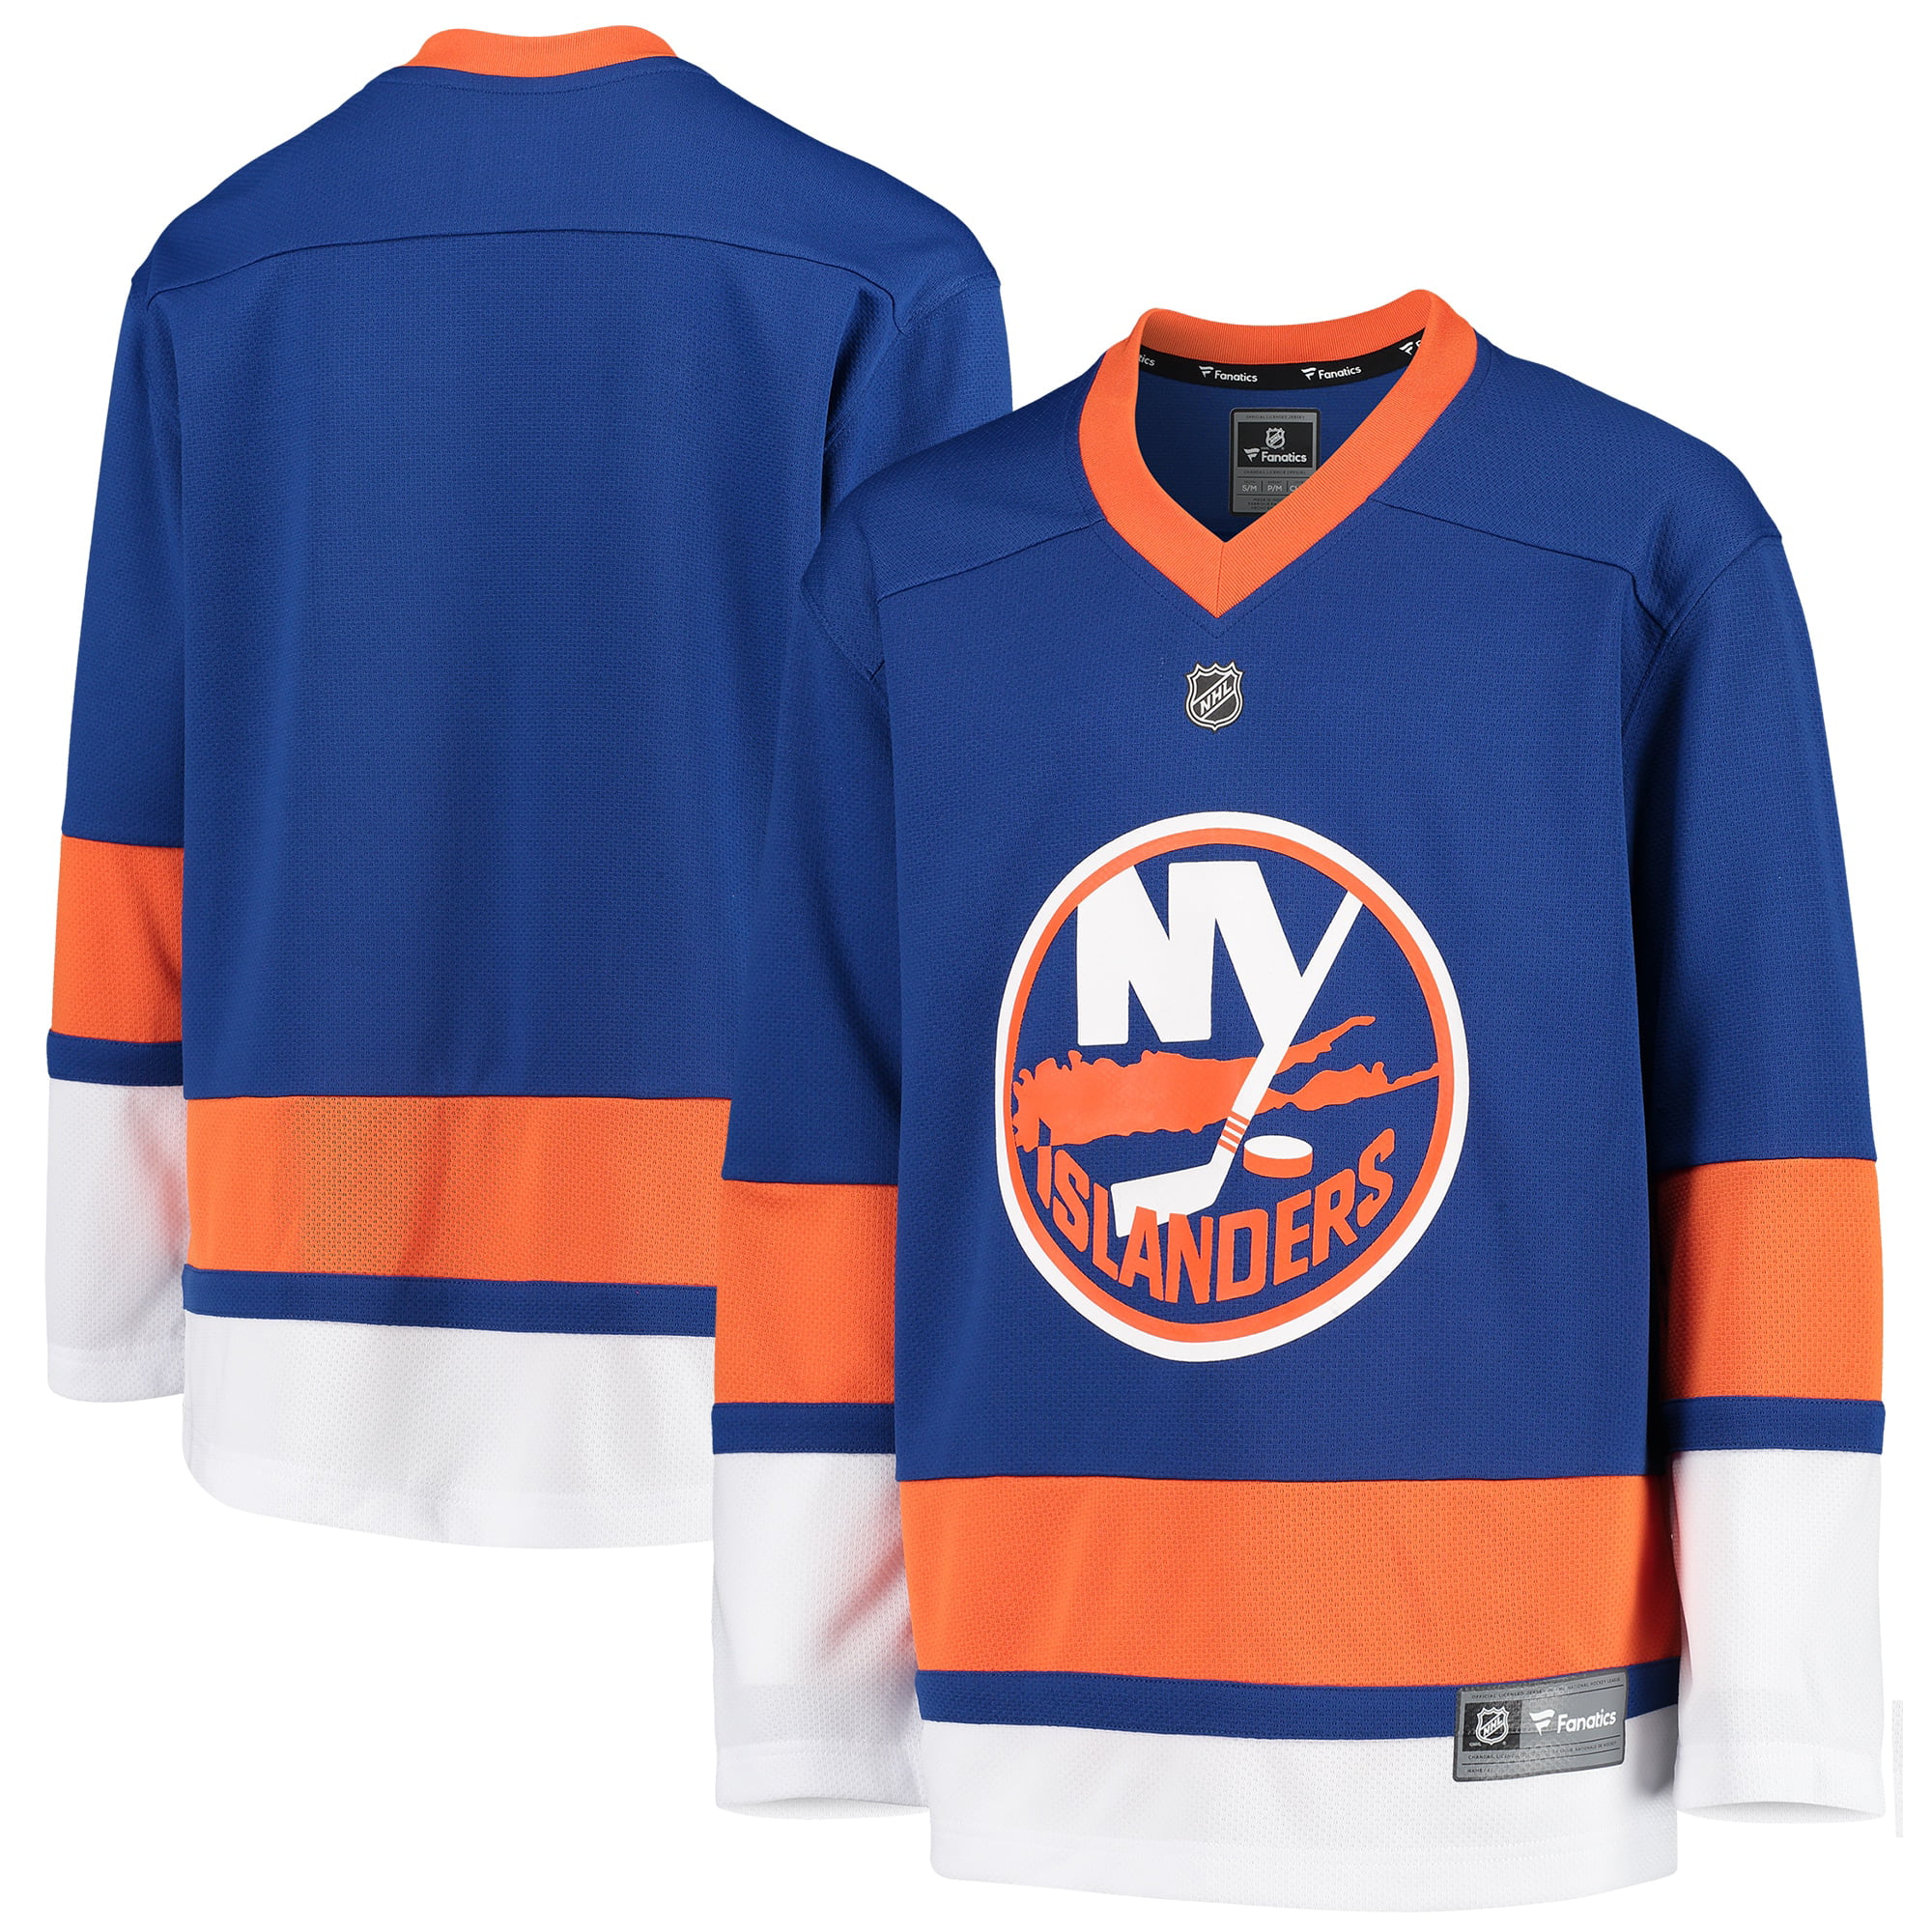 Fanatics - New York Islanders Fanatics Branded Youth Home Replica Blank Jersey - Blue ...